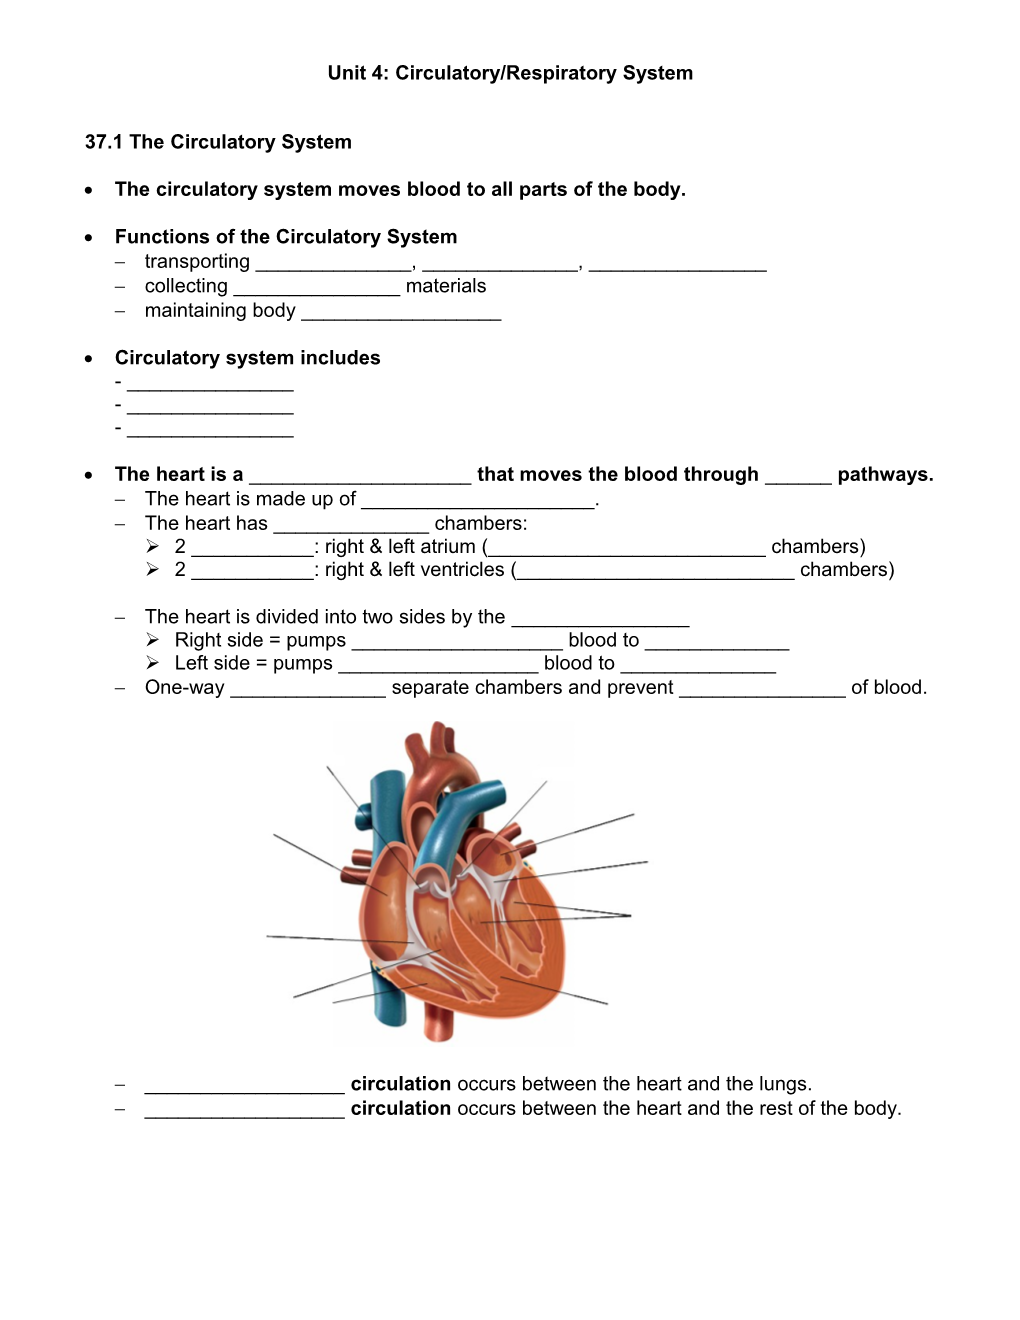 Unit 4: Circulatory/Respiratory System